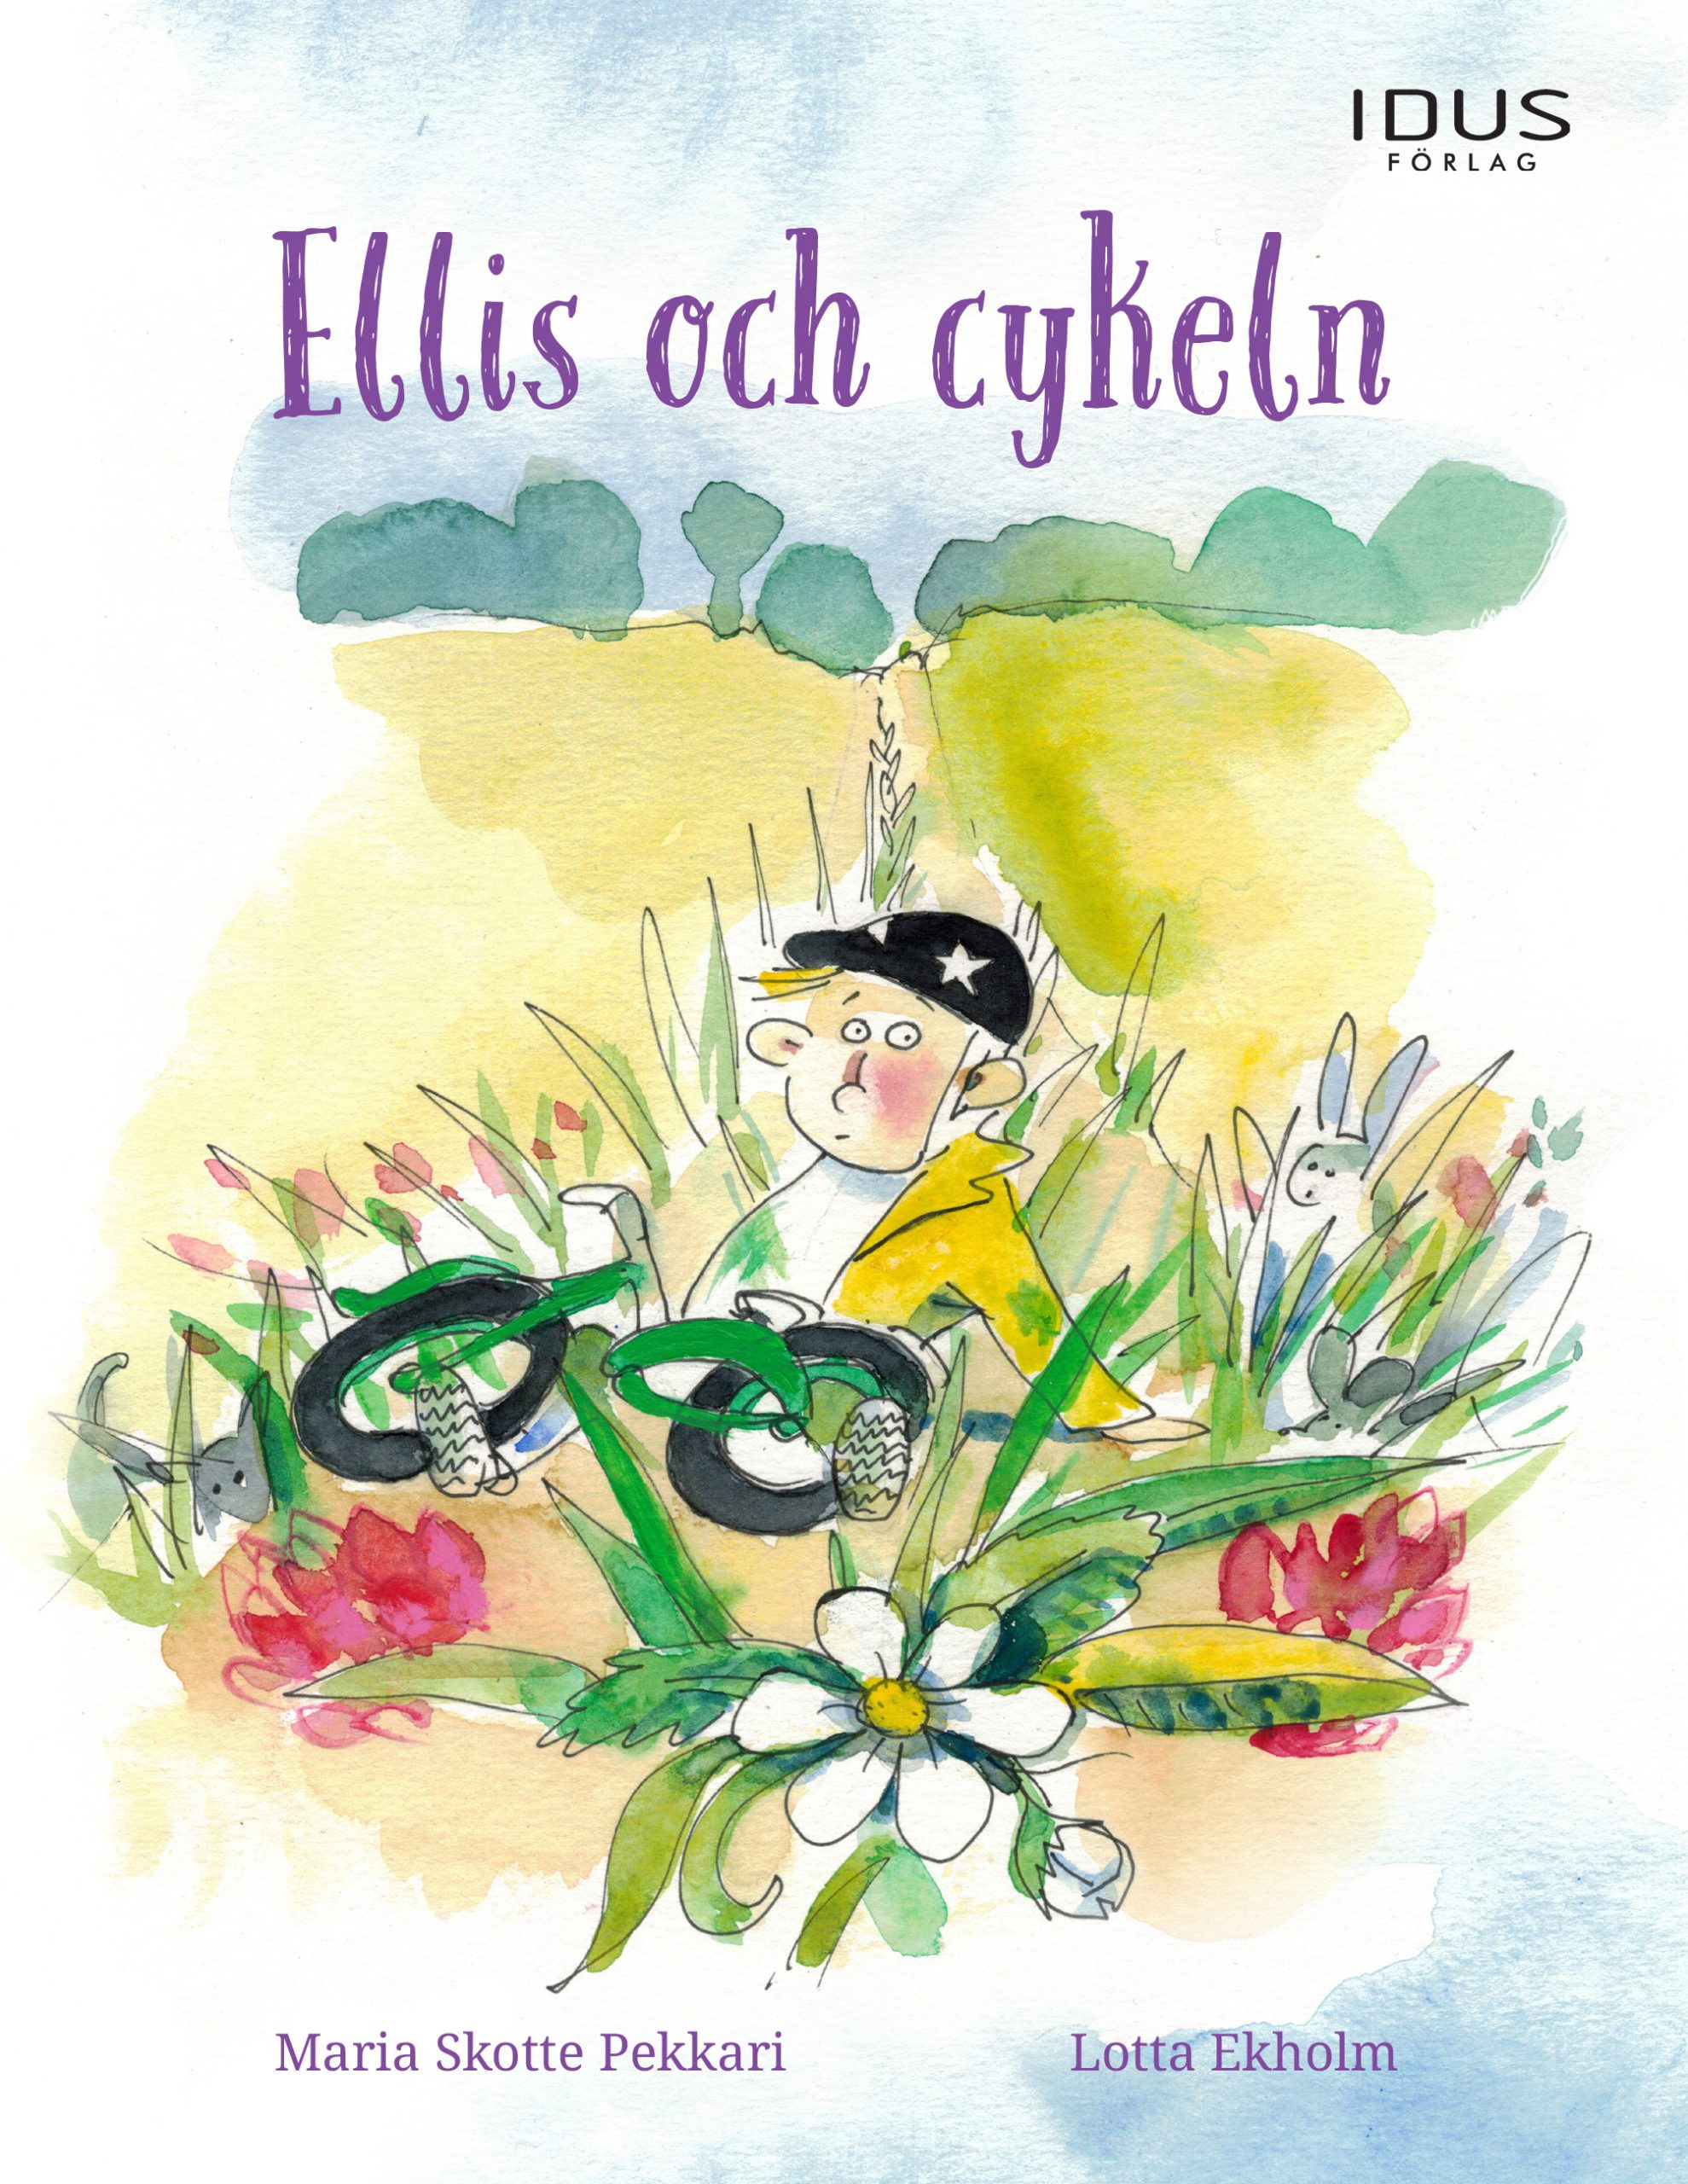 Ellis och cykeln